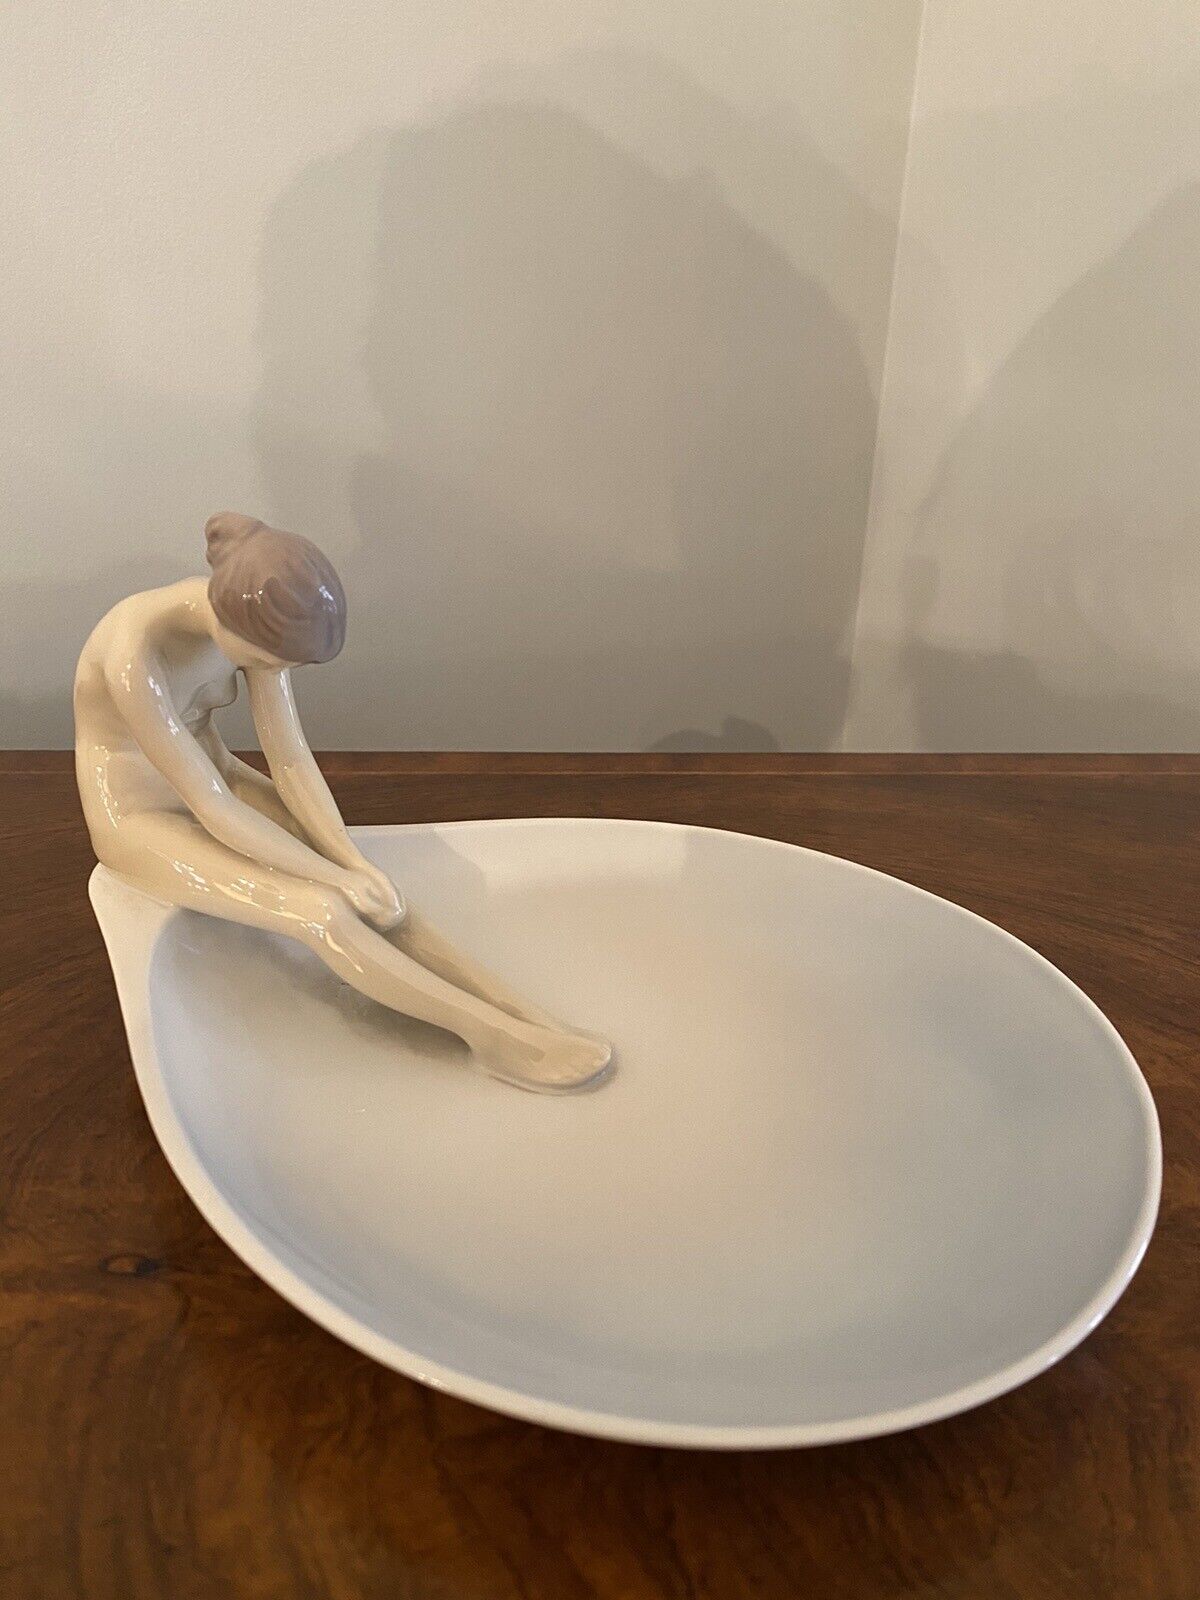 Bing & Grondahl  “Meditation” figurine #1532, Nude Girl Sitting Copenhagen 1949